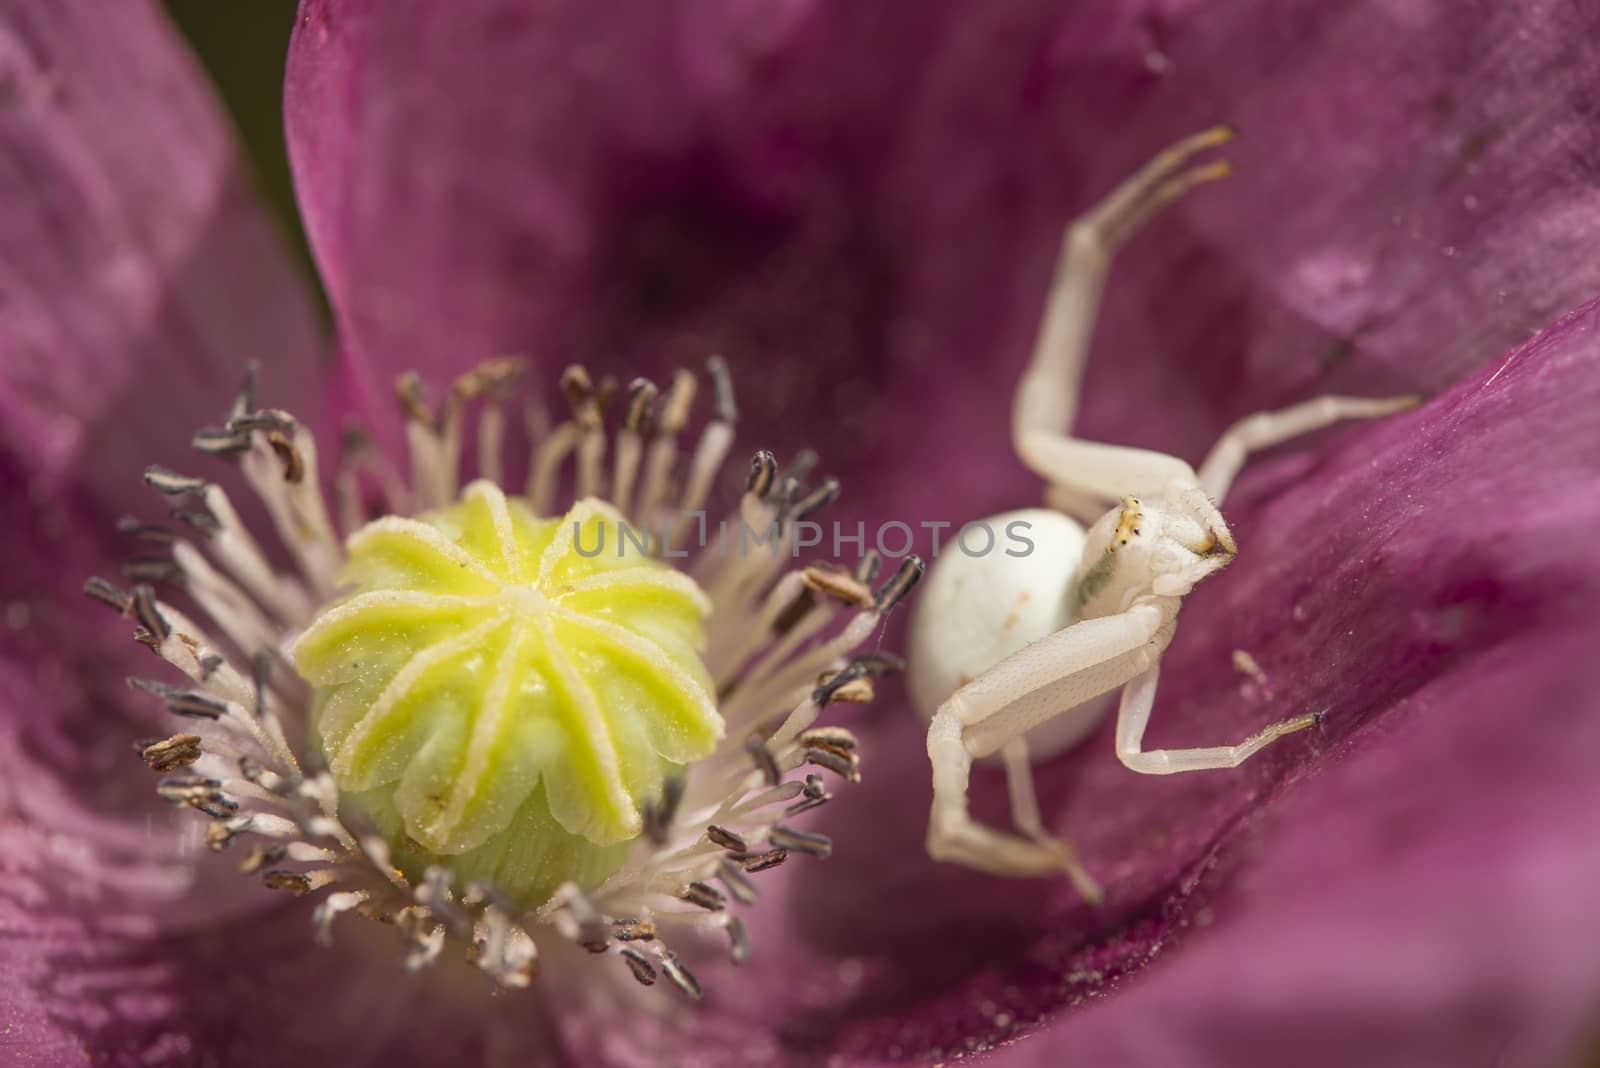 Crab spider on opium poppy flower by AlessandroZocc